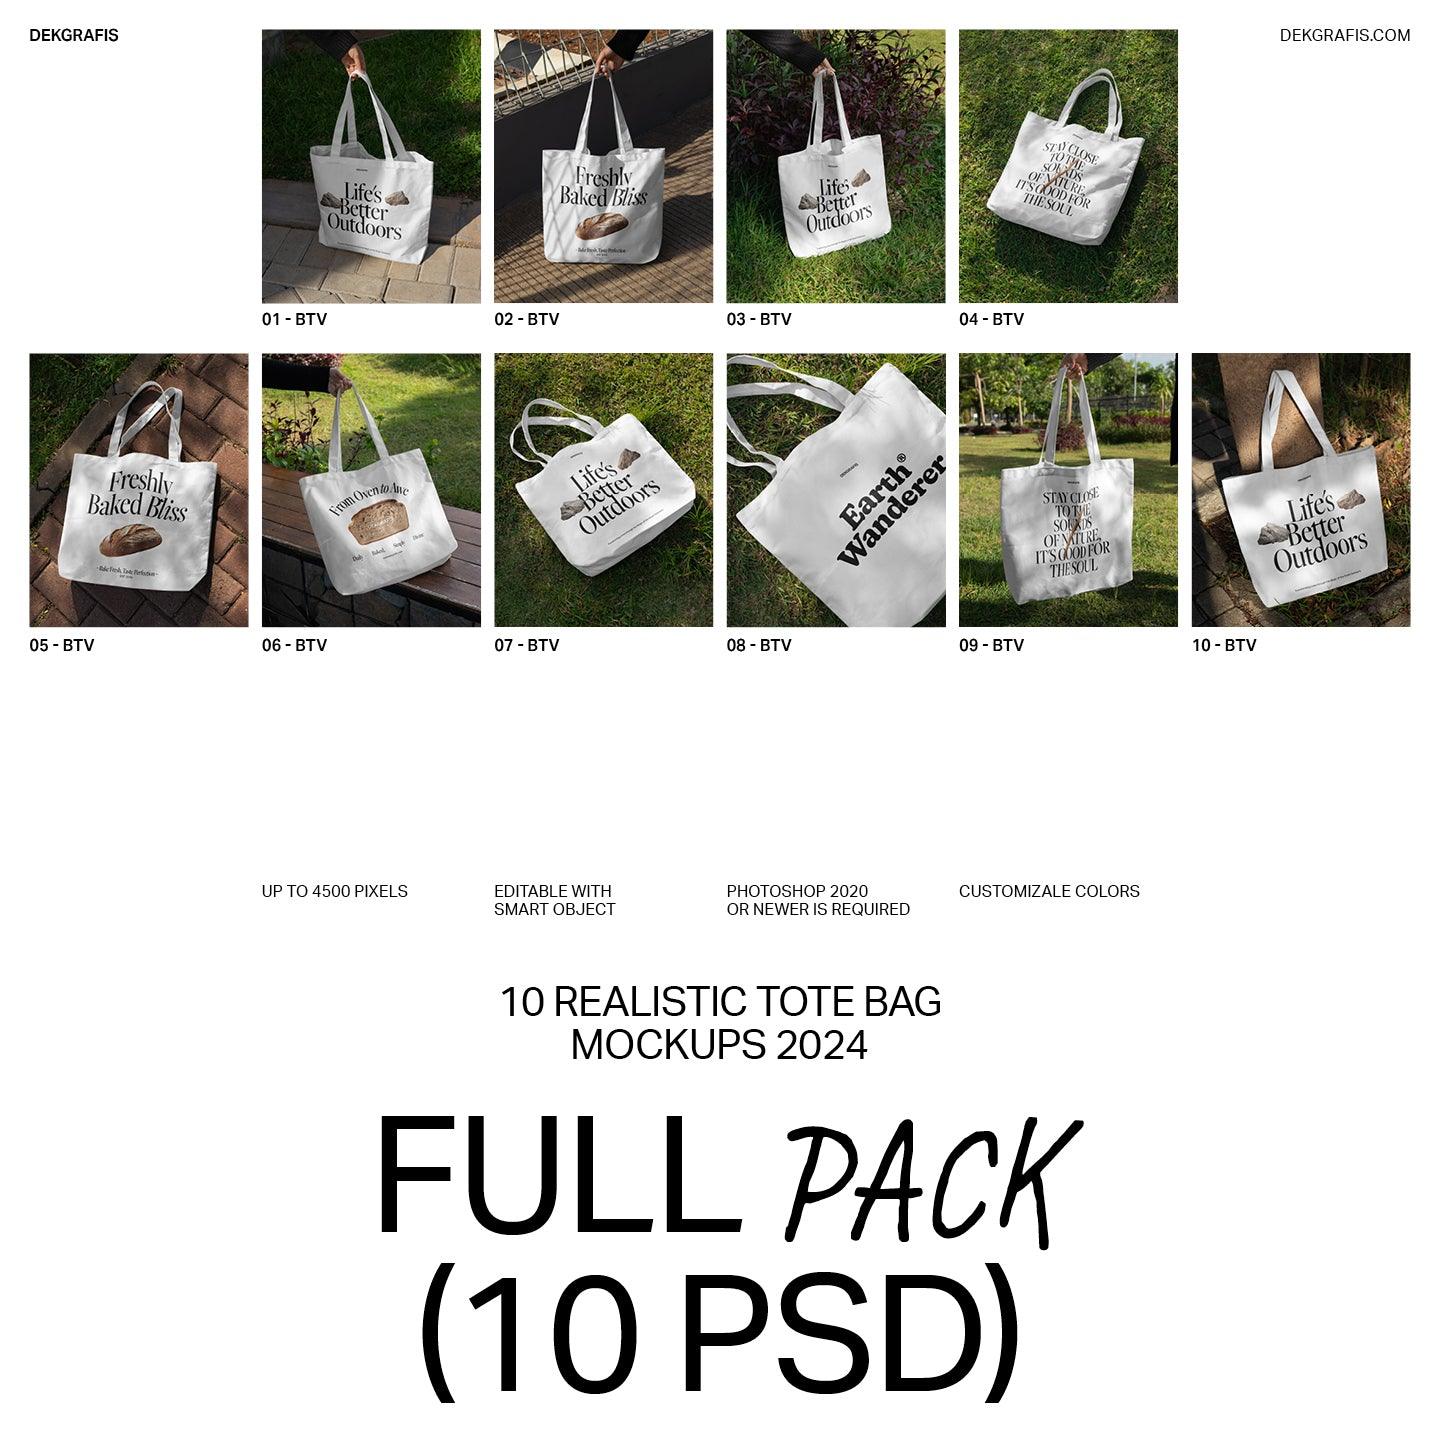 10 Realistic Tote Bag Mockups 2024